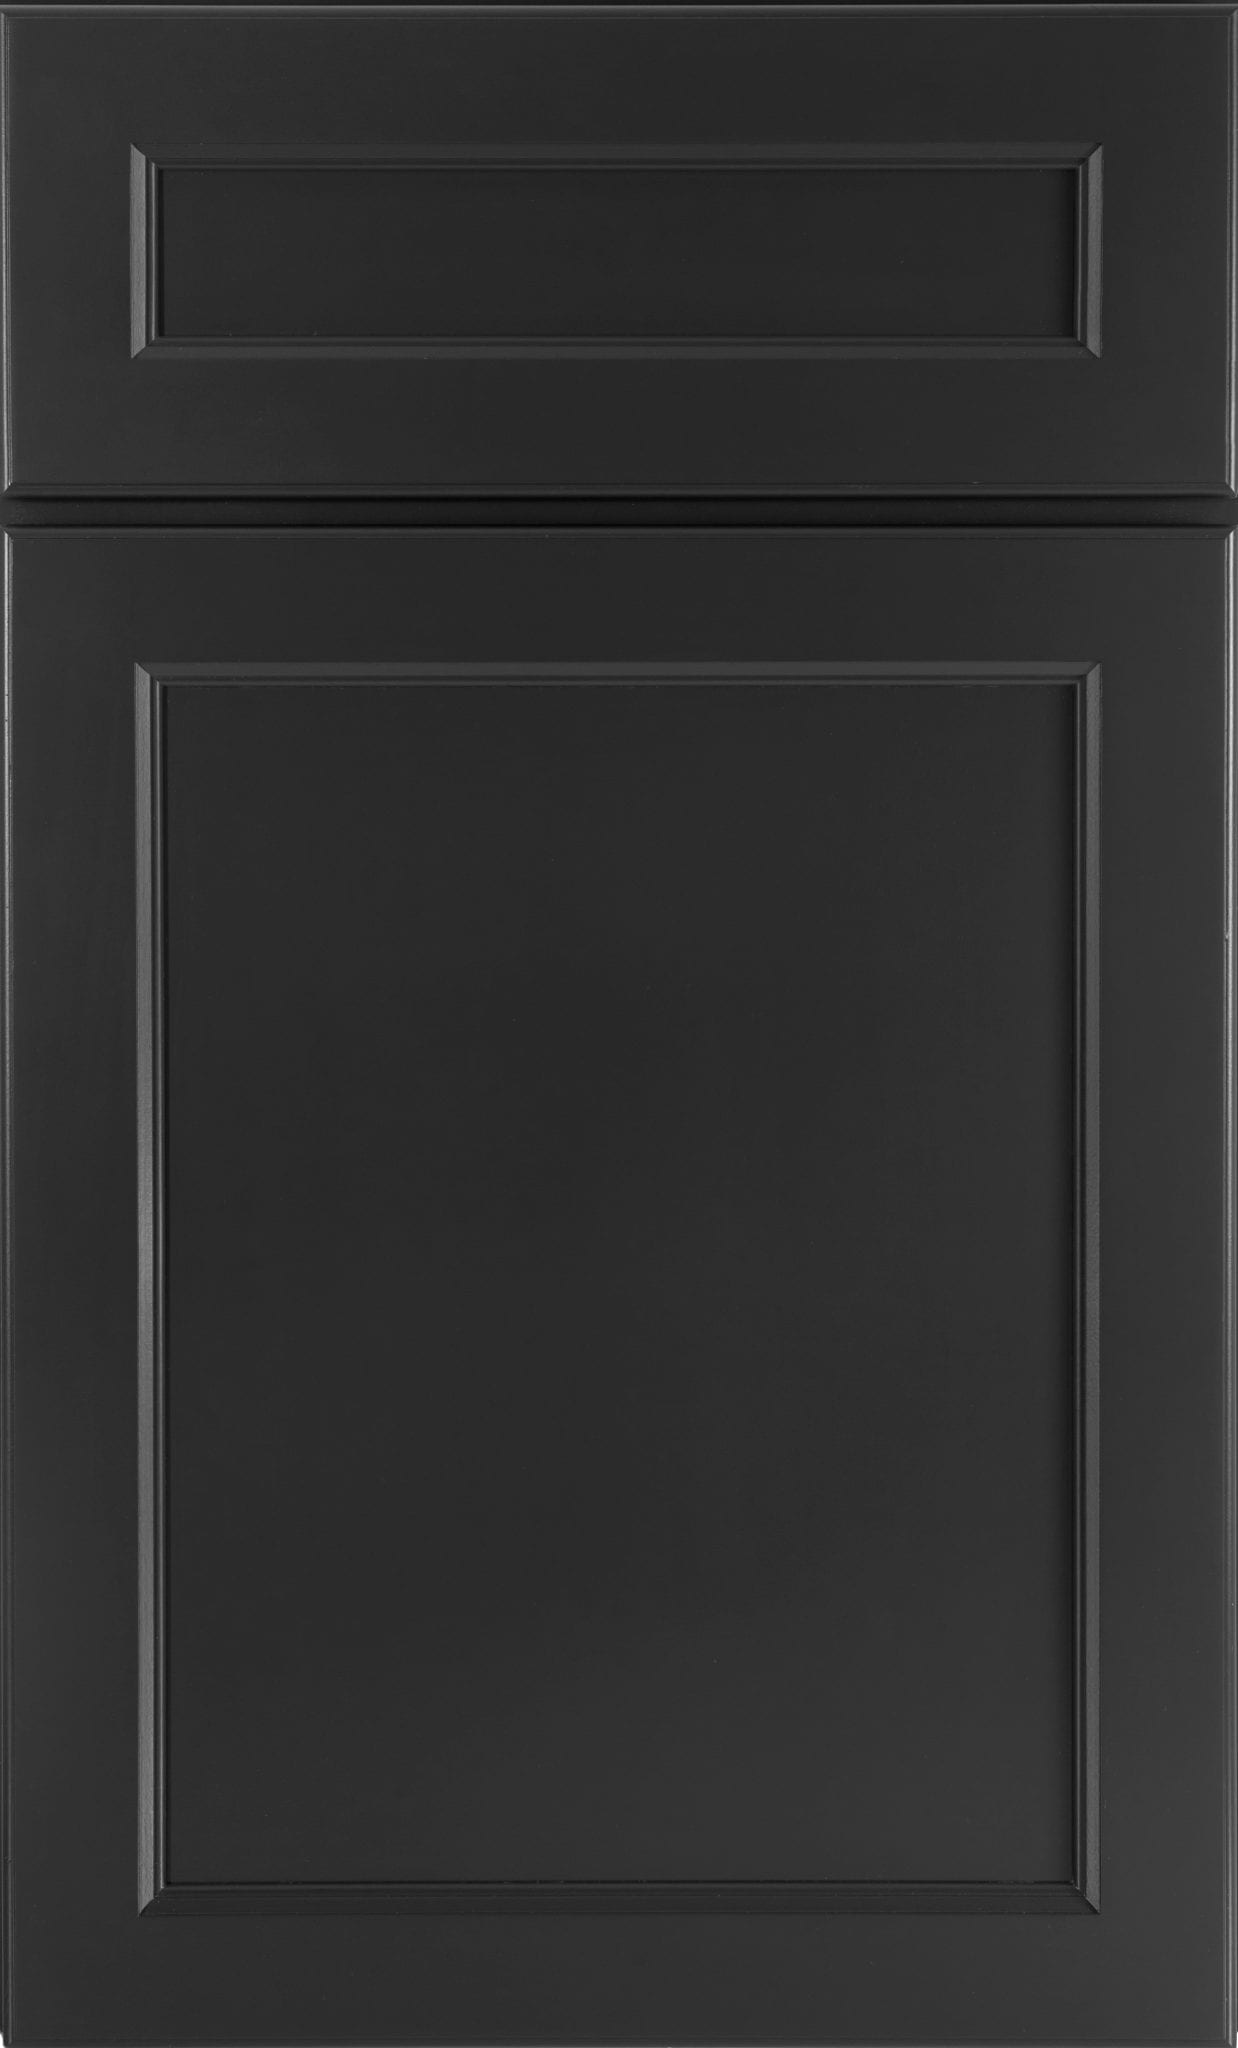 Charcoal cabinet door for kitchen and bathroom